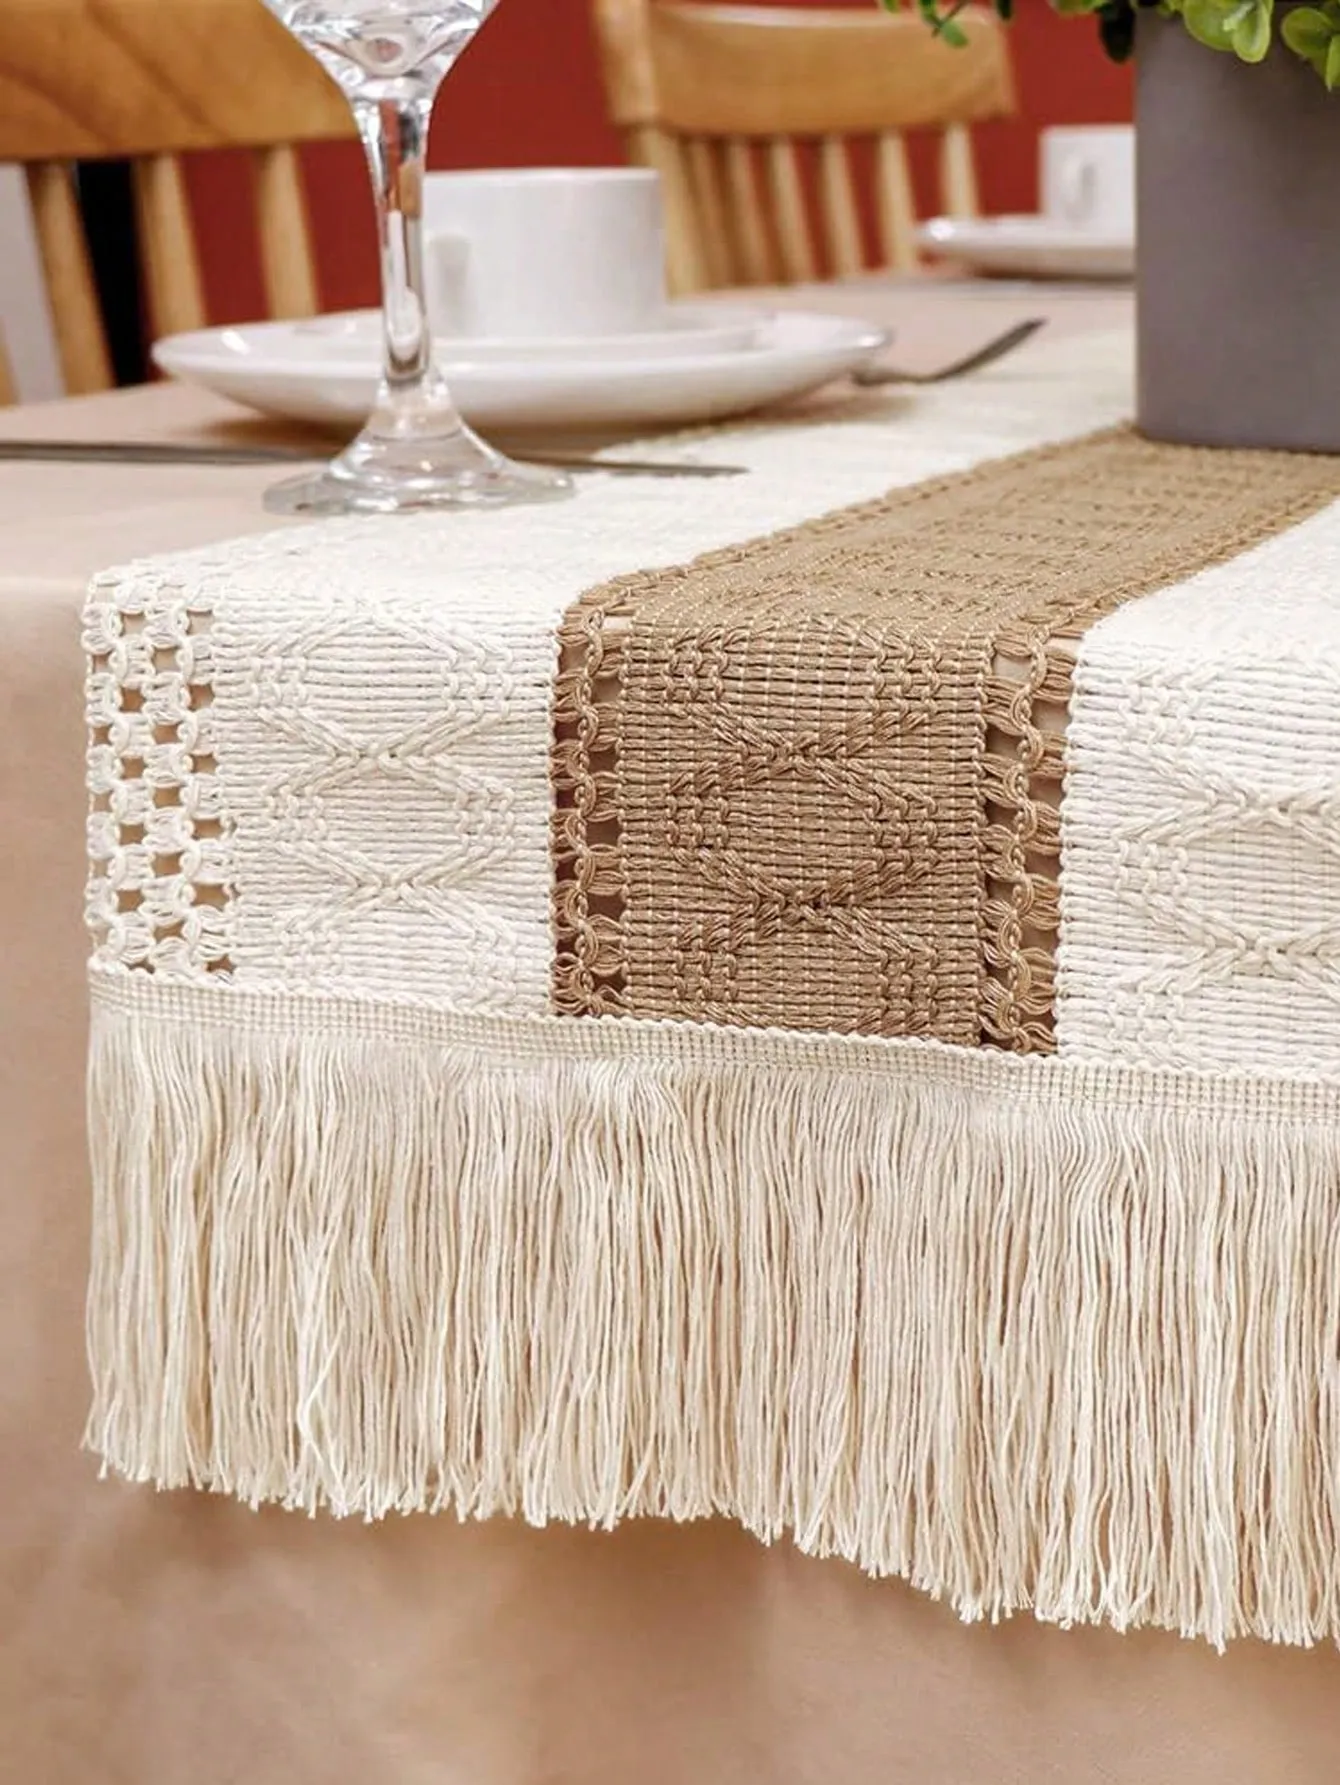 30x180cm再利用可能な自然織りテーブルクロス家の装飾、フェスティバル、ケータリング、特別な機会、クリスマス、家族の集まりに適しています